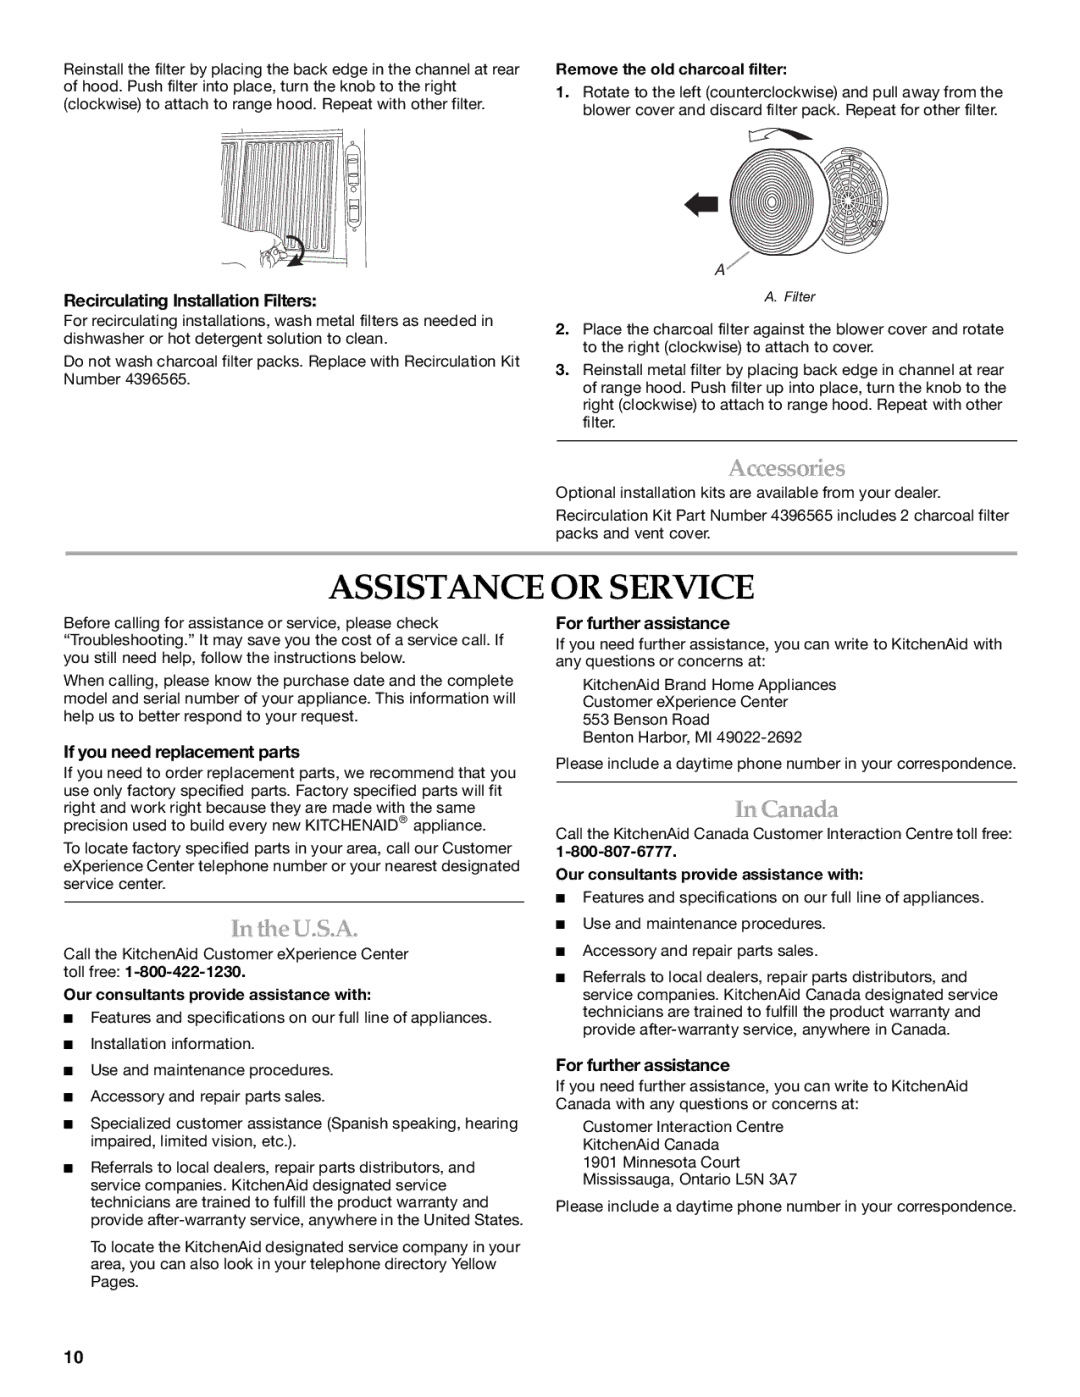 KitchenAid RangeHood installation instructions Assistance or Service, Accessories, U.S.A, Canada 